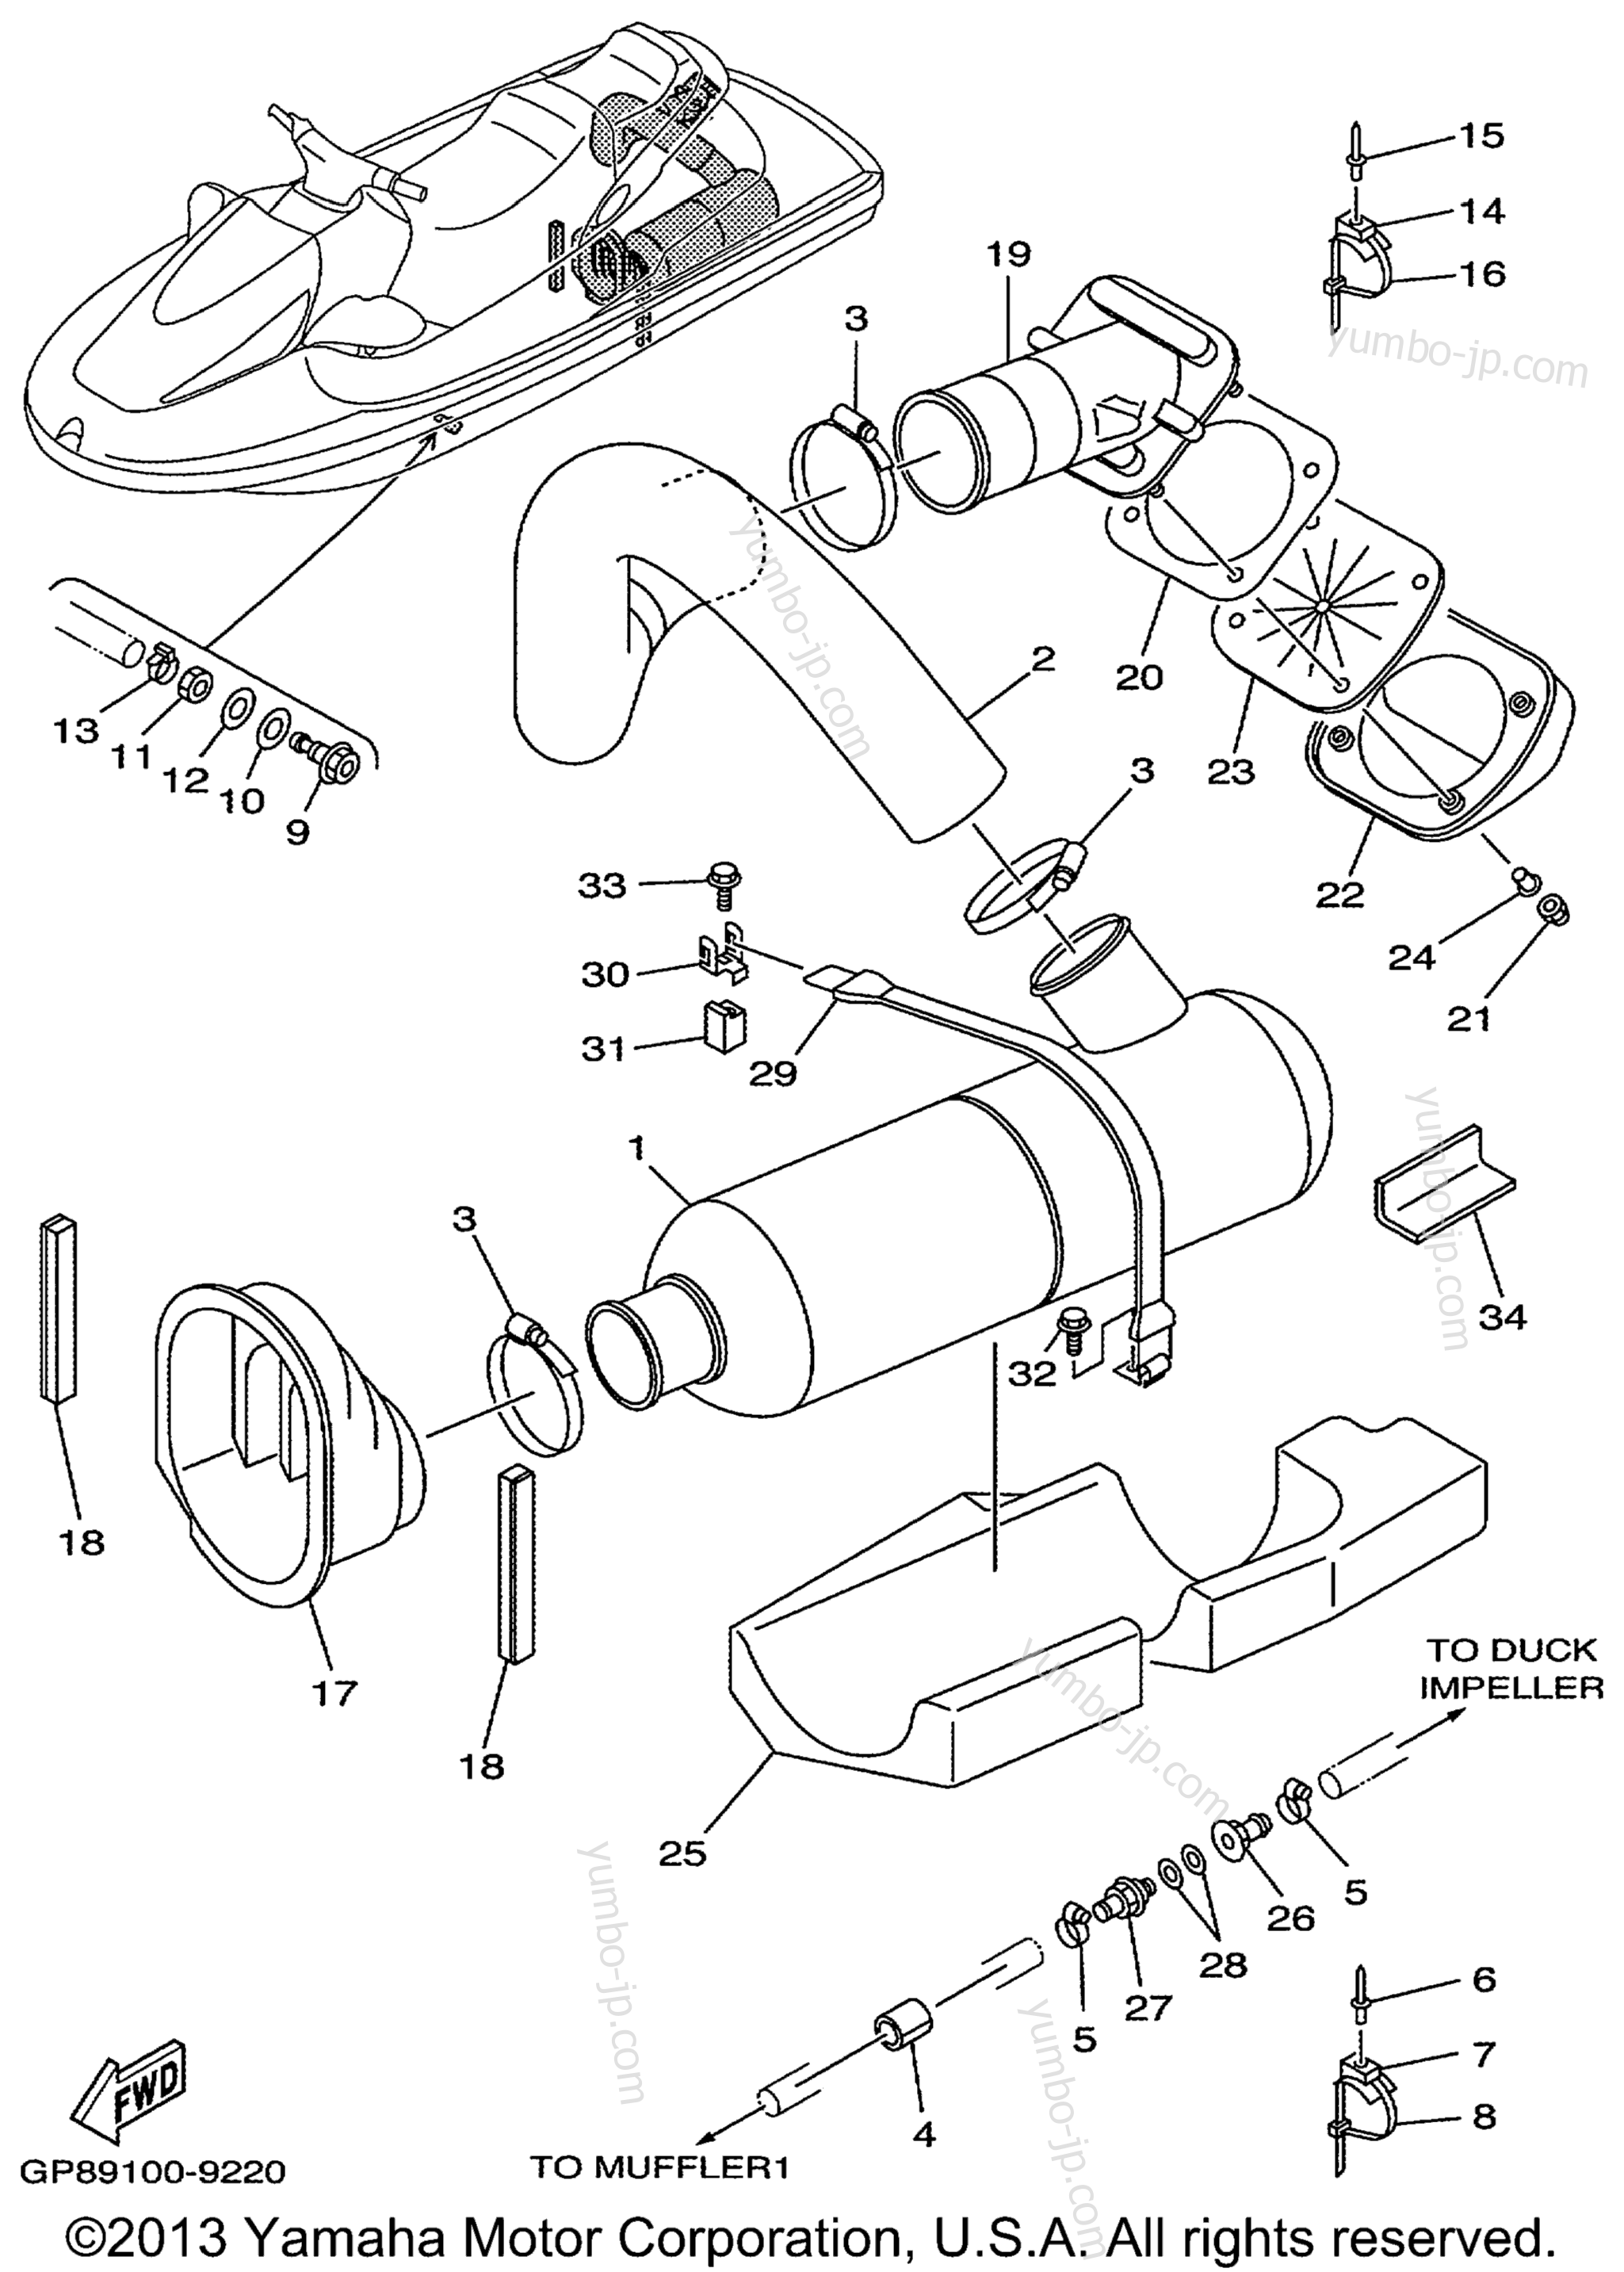 Exhaust 2 для гидроциклов YAMAHA WAVE RUNNER GP1200 (GP1200X) 1999 г.